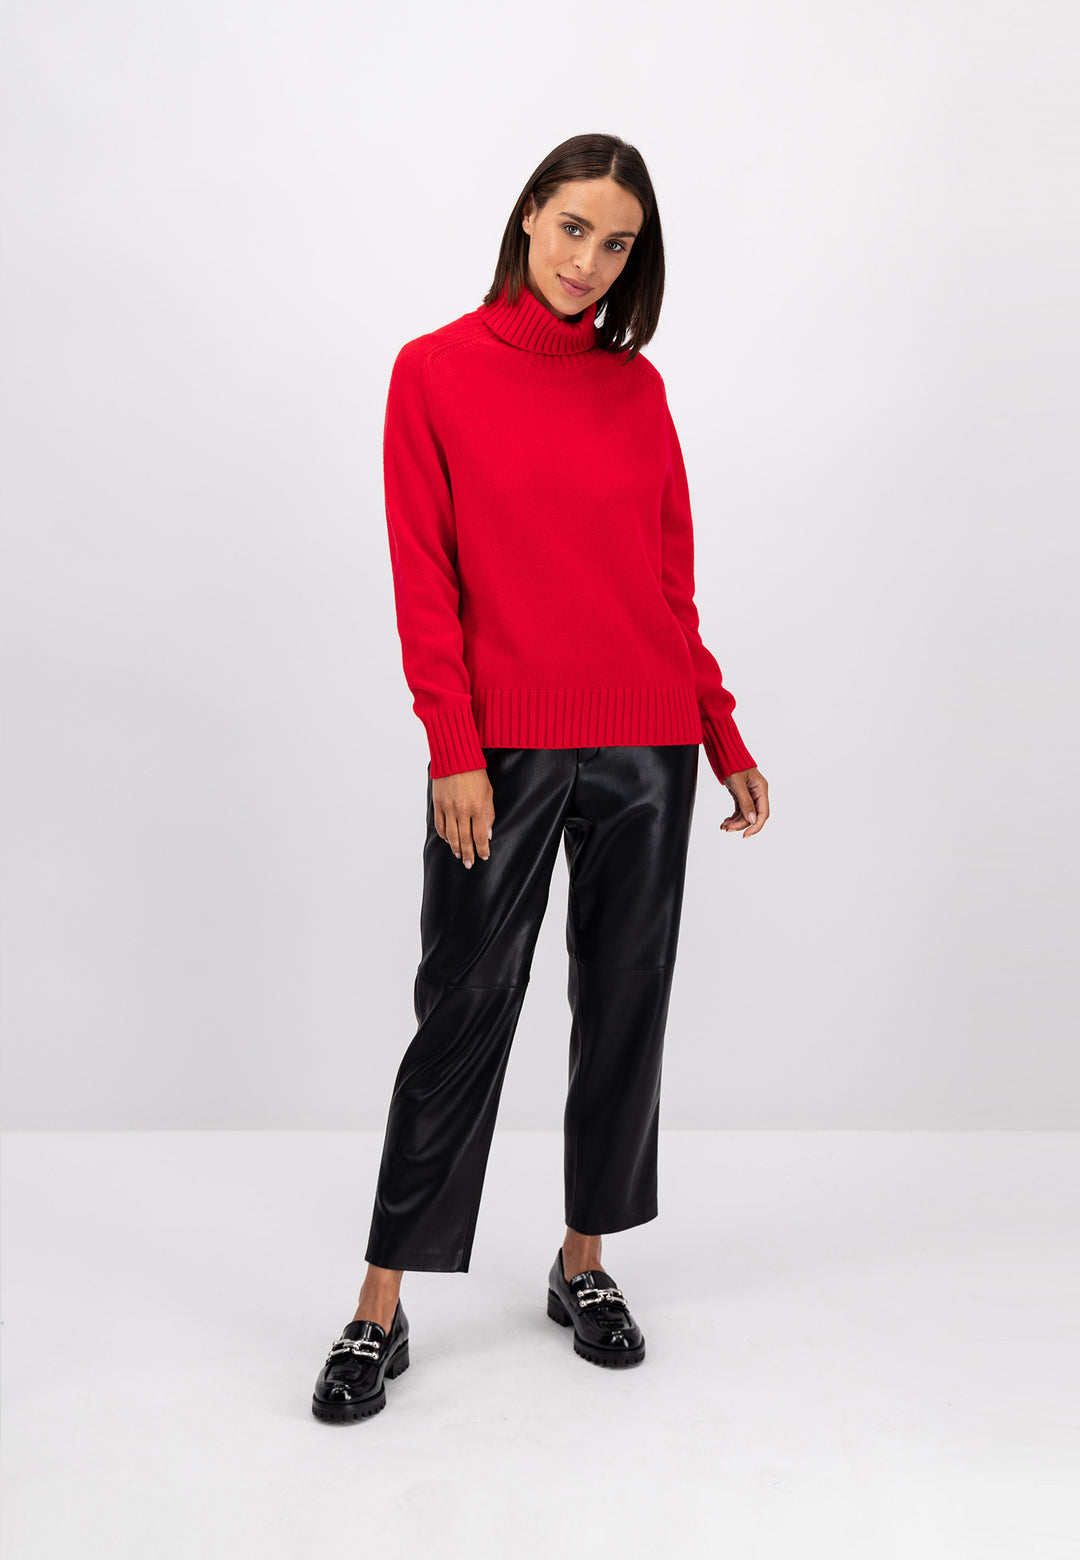 Online Ladies | 2 – Sweaters & Page Fynch-Hatton – | Online Shop Offizieller Official Cardigans FYNCH-HATTON Shop